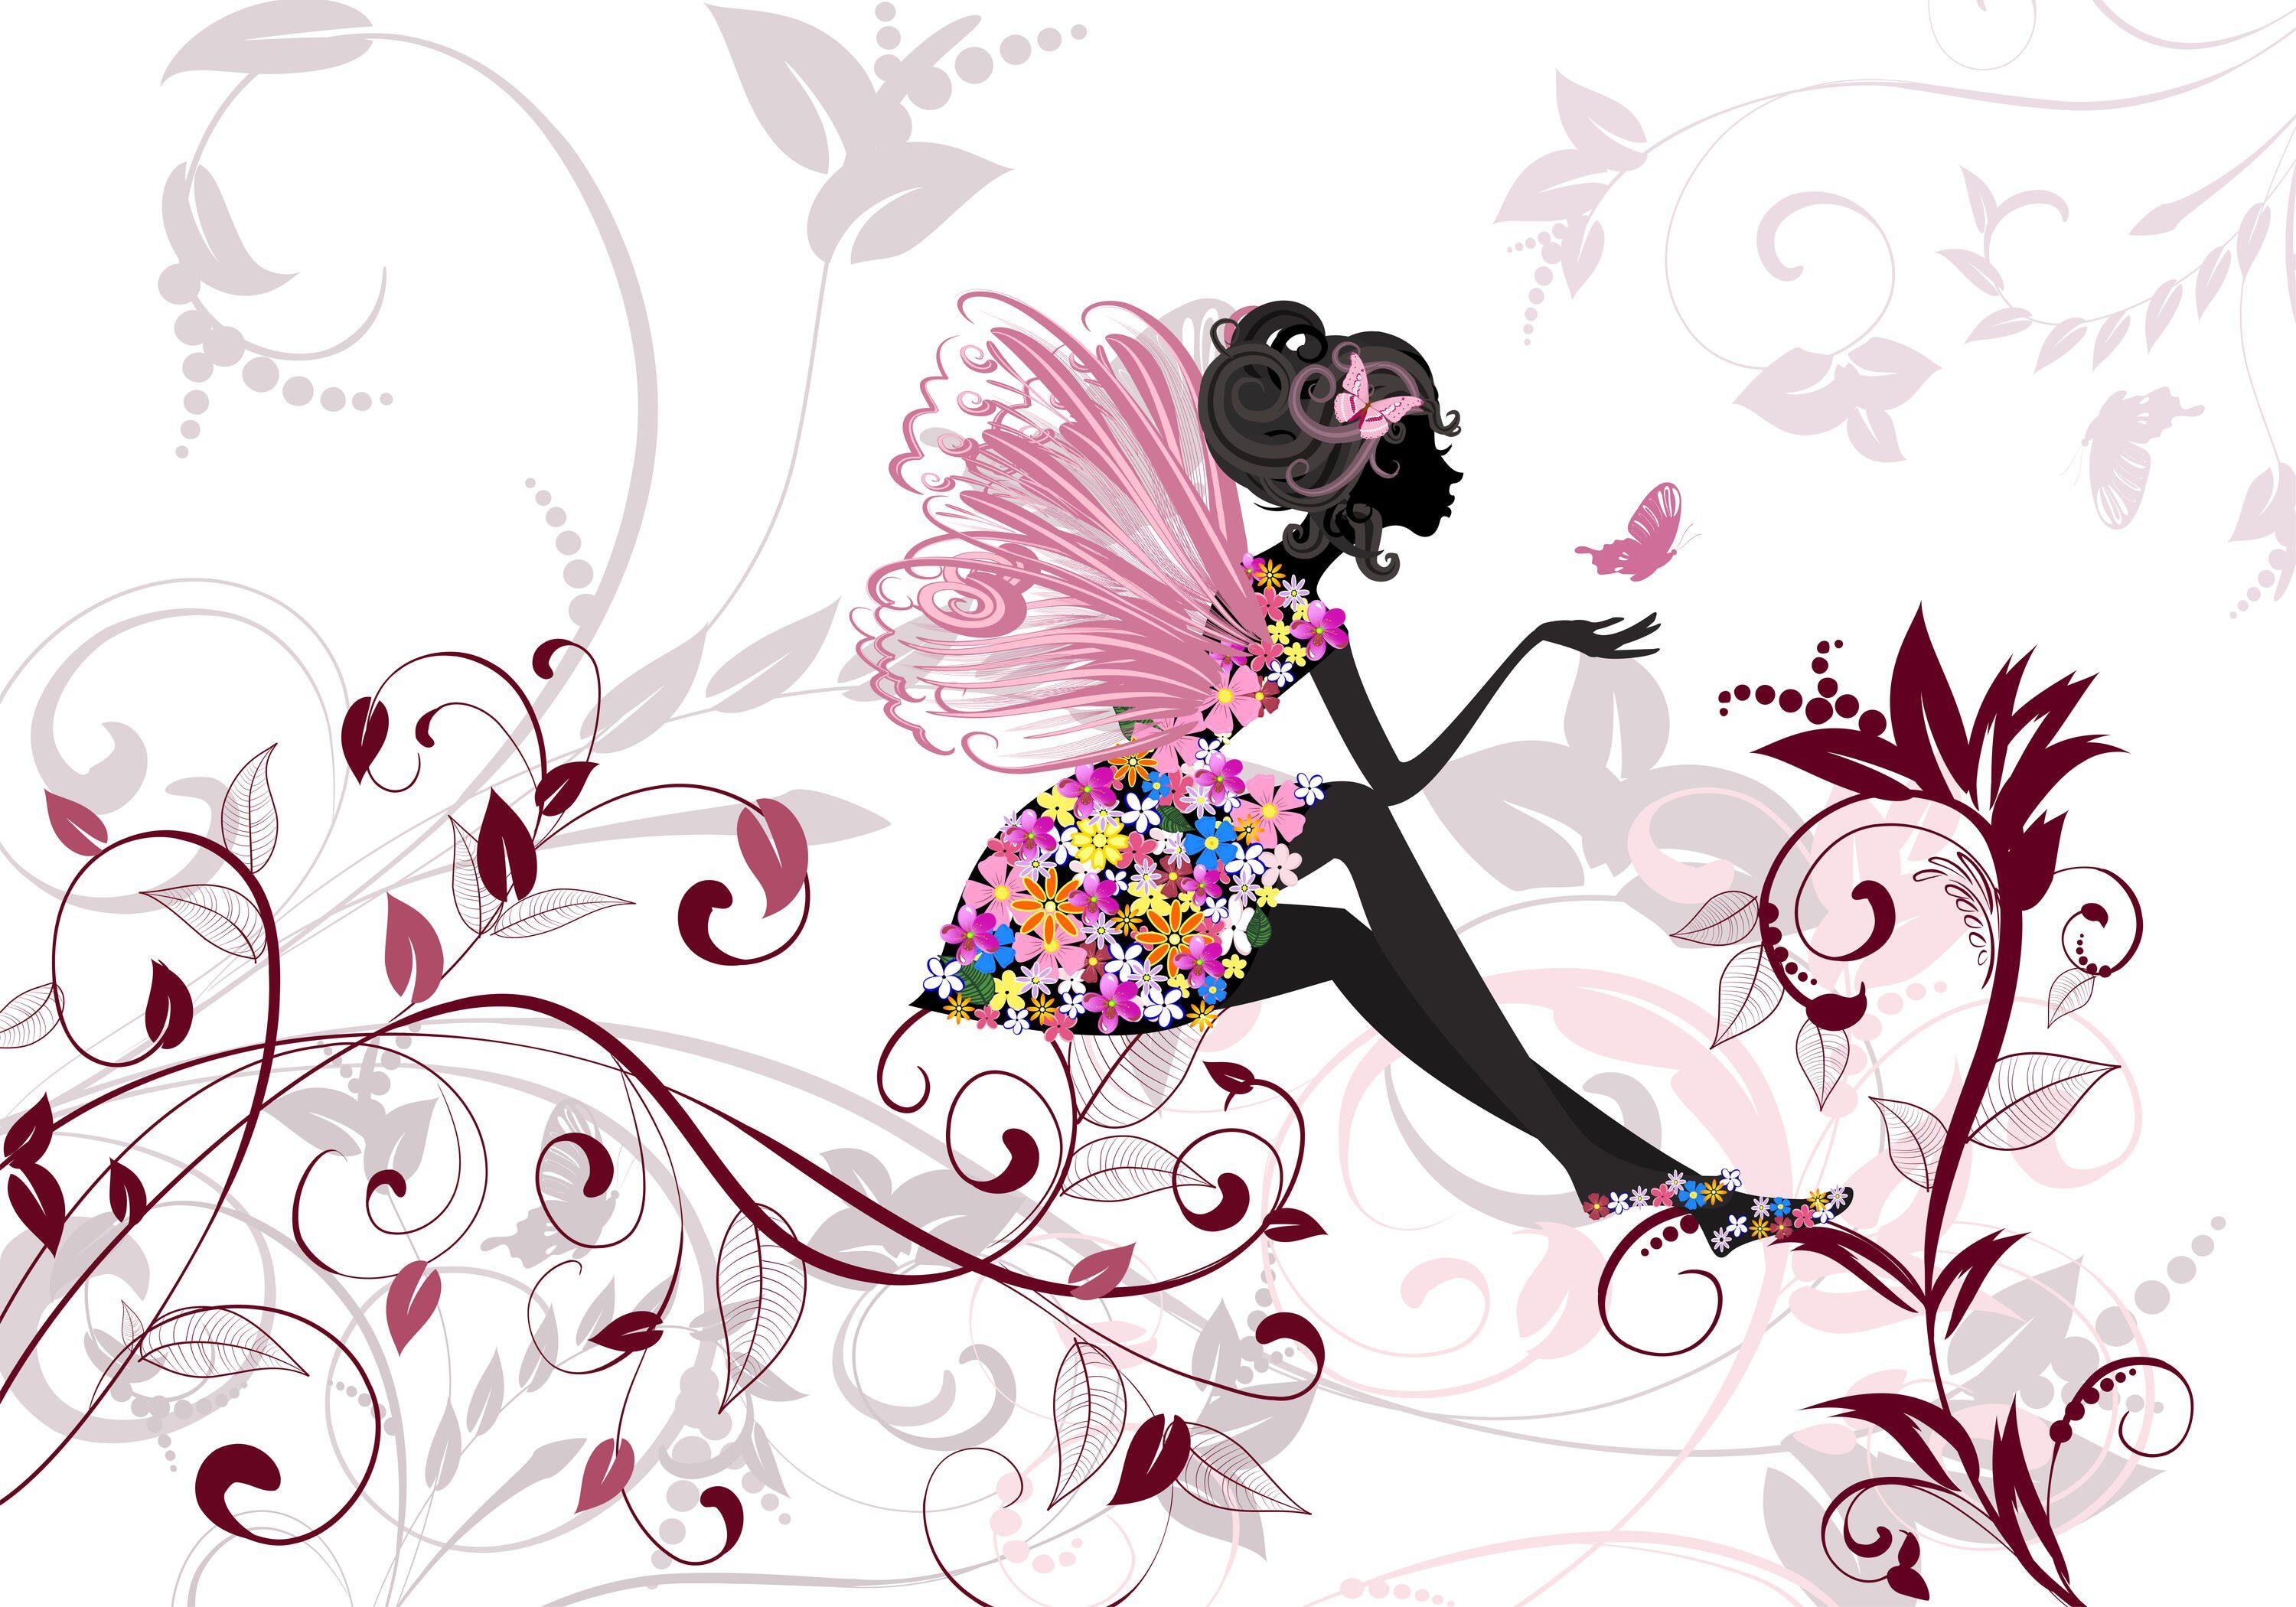 Motivtapete, Fototapete Vliestapete wandmotiv24 mit Blumenfee Schmetterling, Wandtapete, matt, glatt,